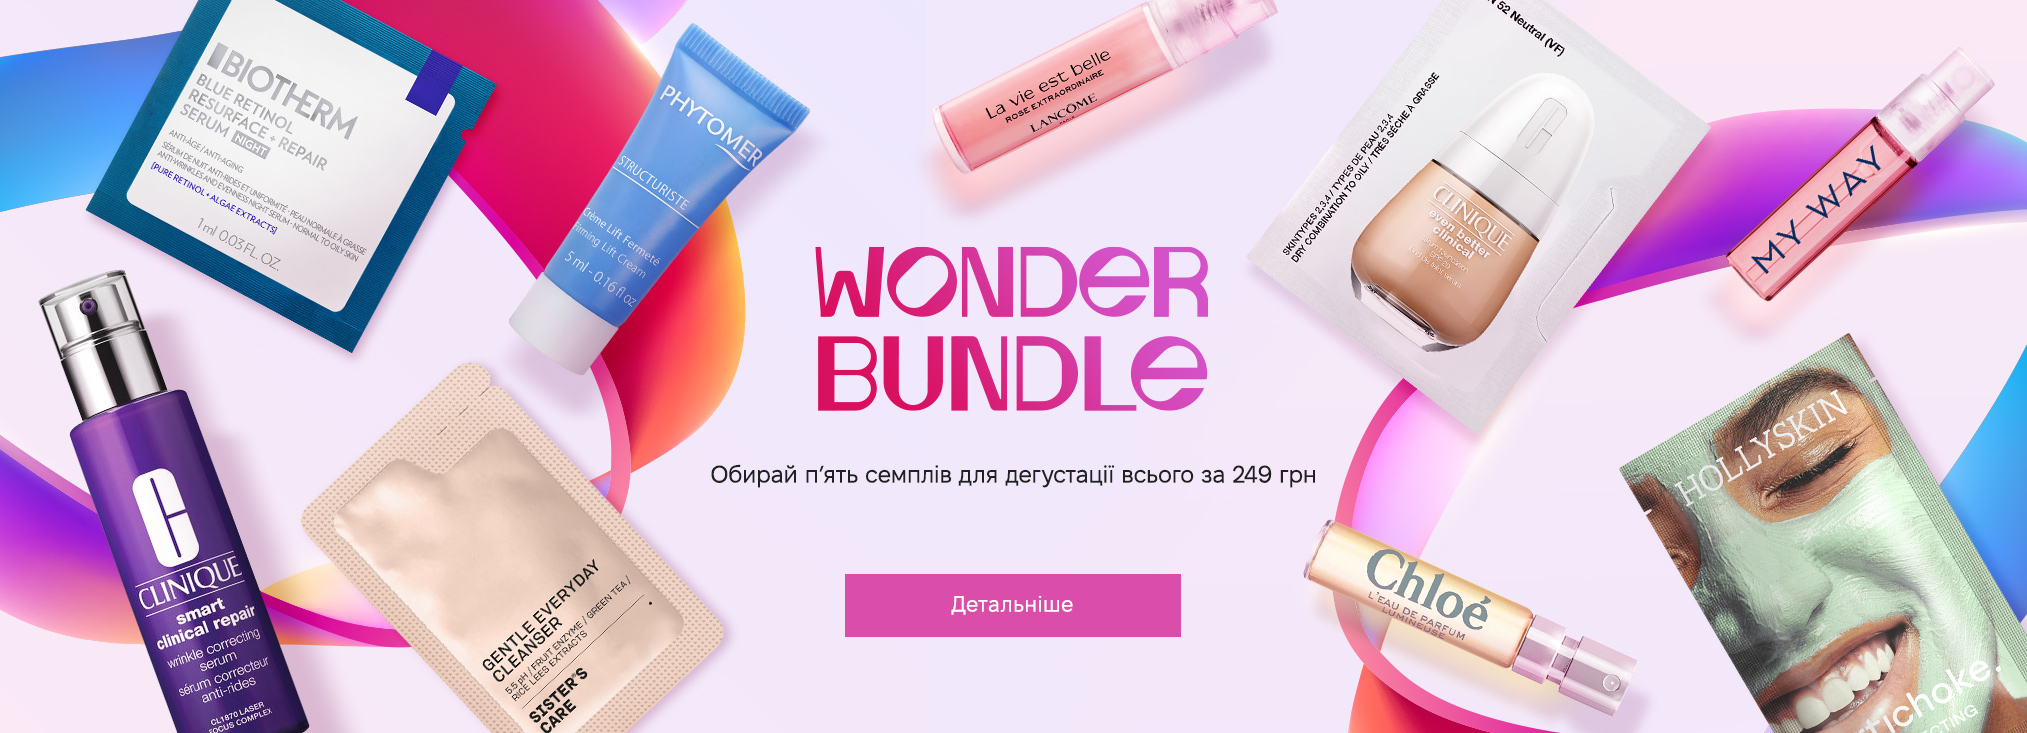 Wonder Bundle_3